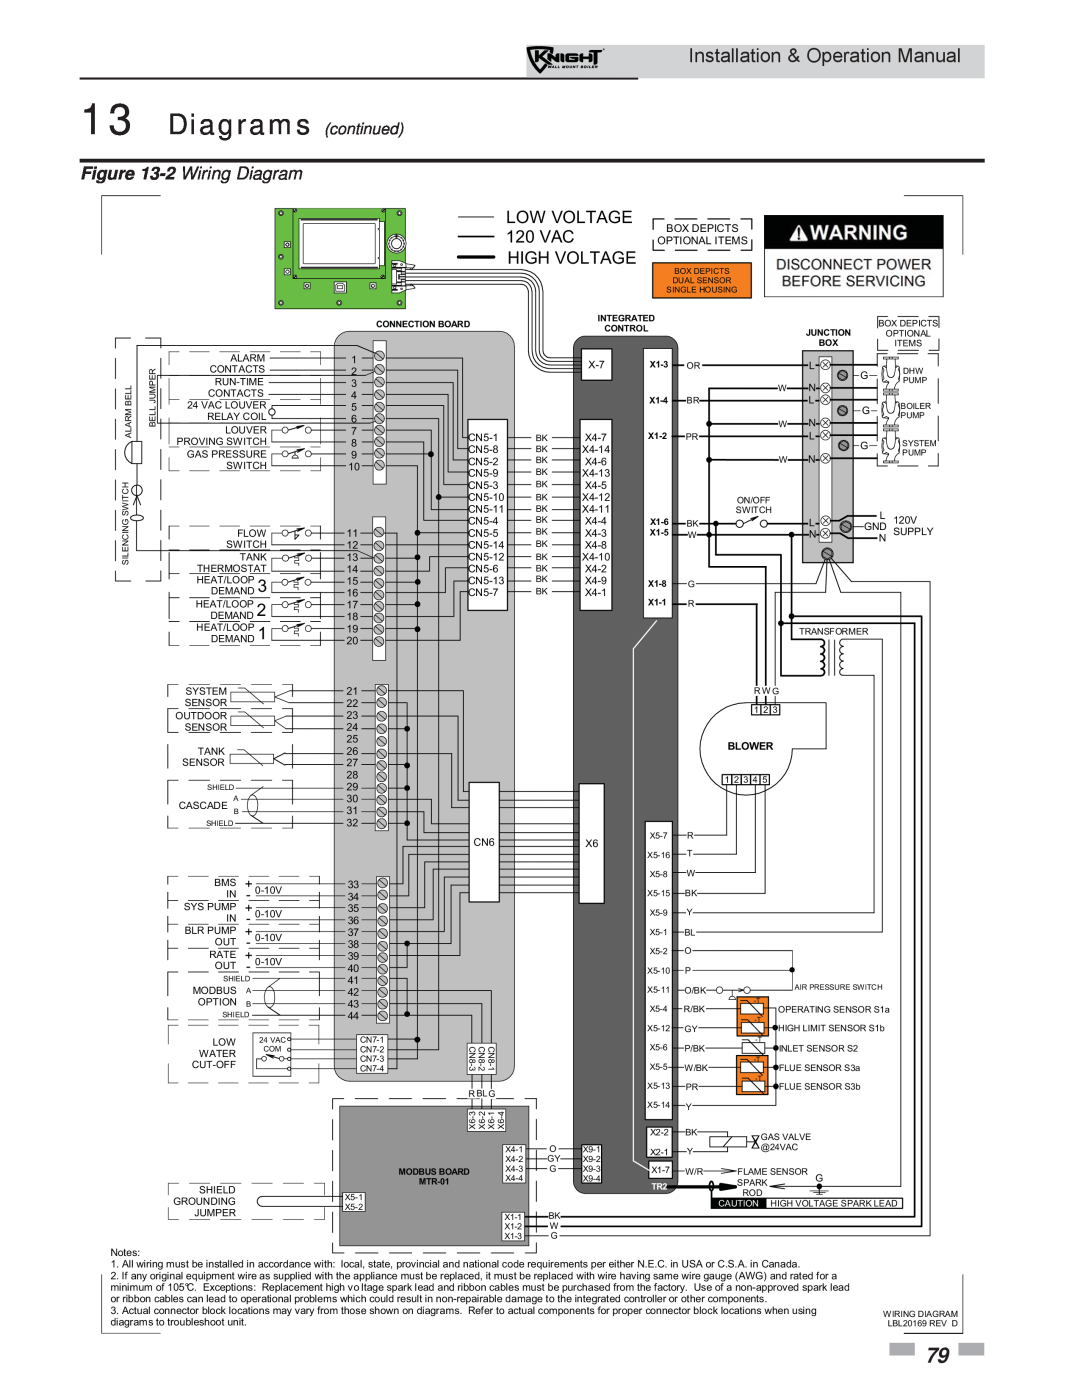 Lochinvar WH 55-399 2 Wiring Diagram, Installation & Operation Manual, LOW VOLTAGE 120 VAC HIGH VOLTAGE, Blower 